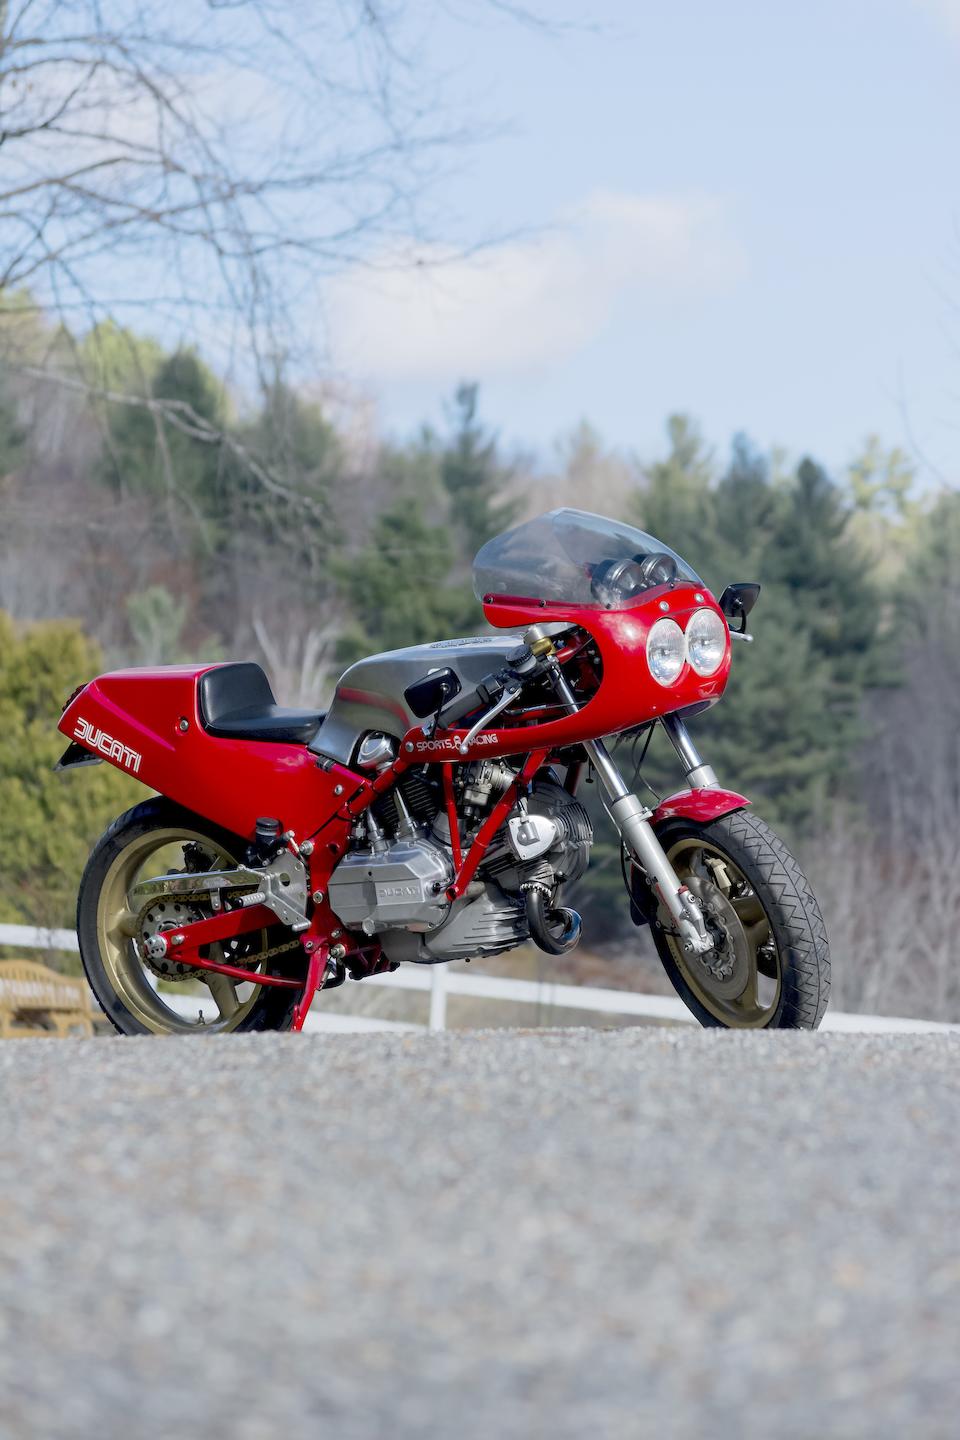 1985 Harris Ducati "SPORTS IMOLA" 900cc Frame no. HPD90022